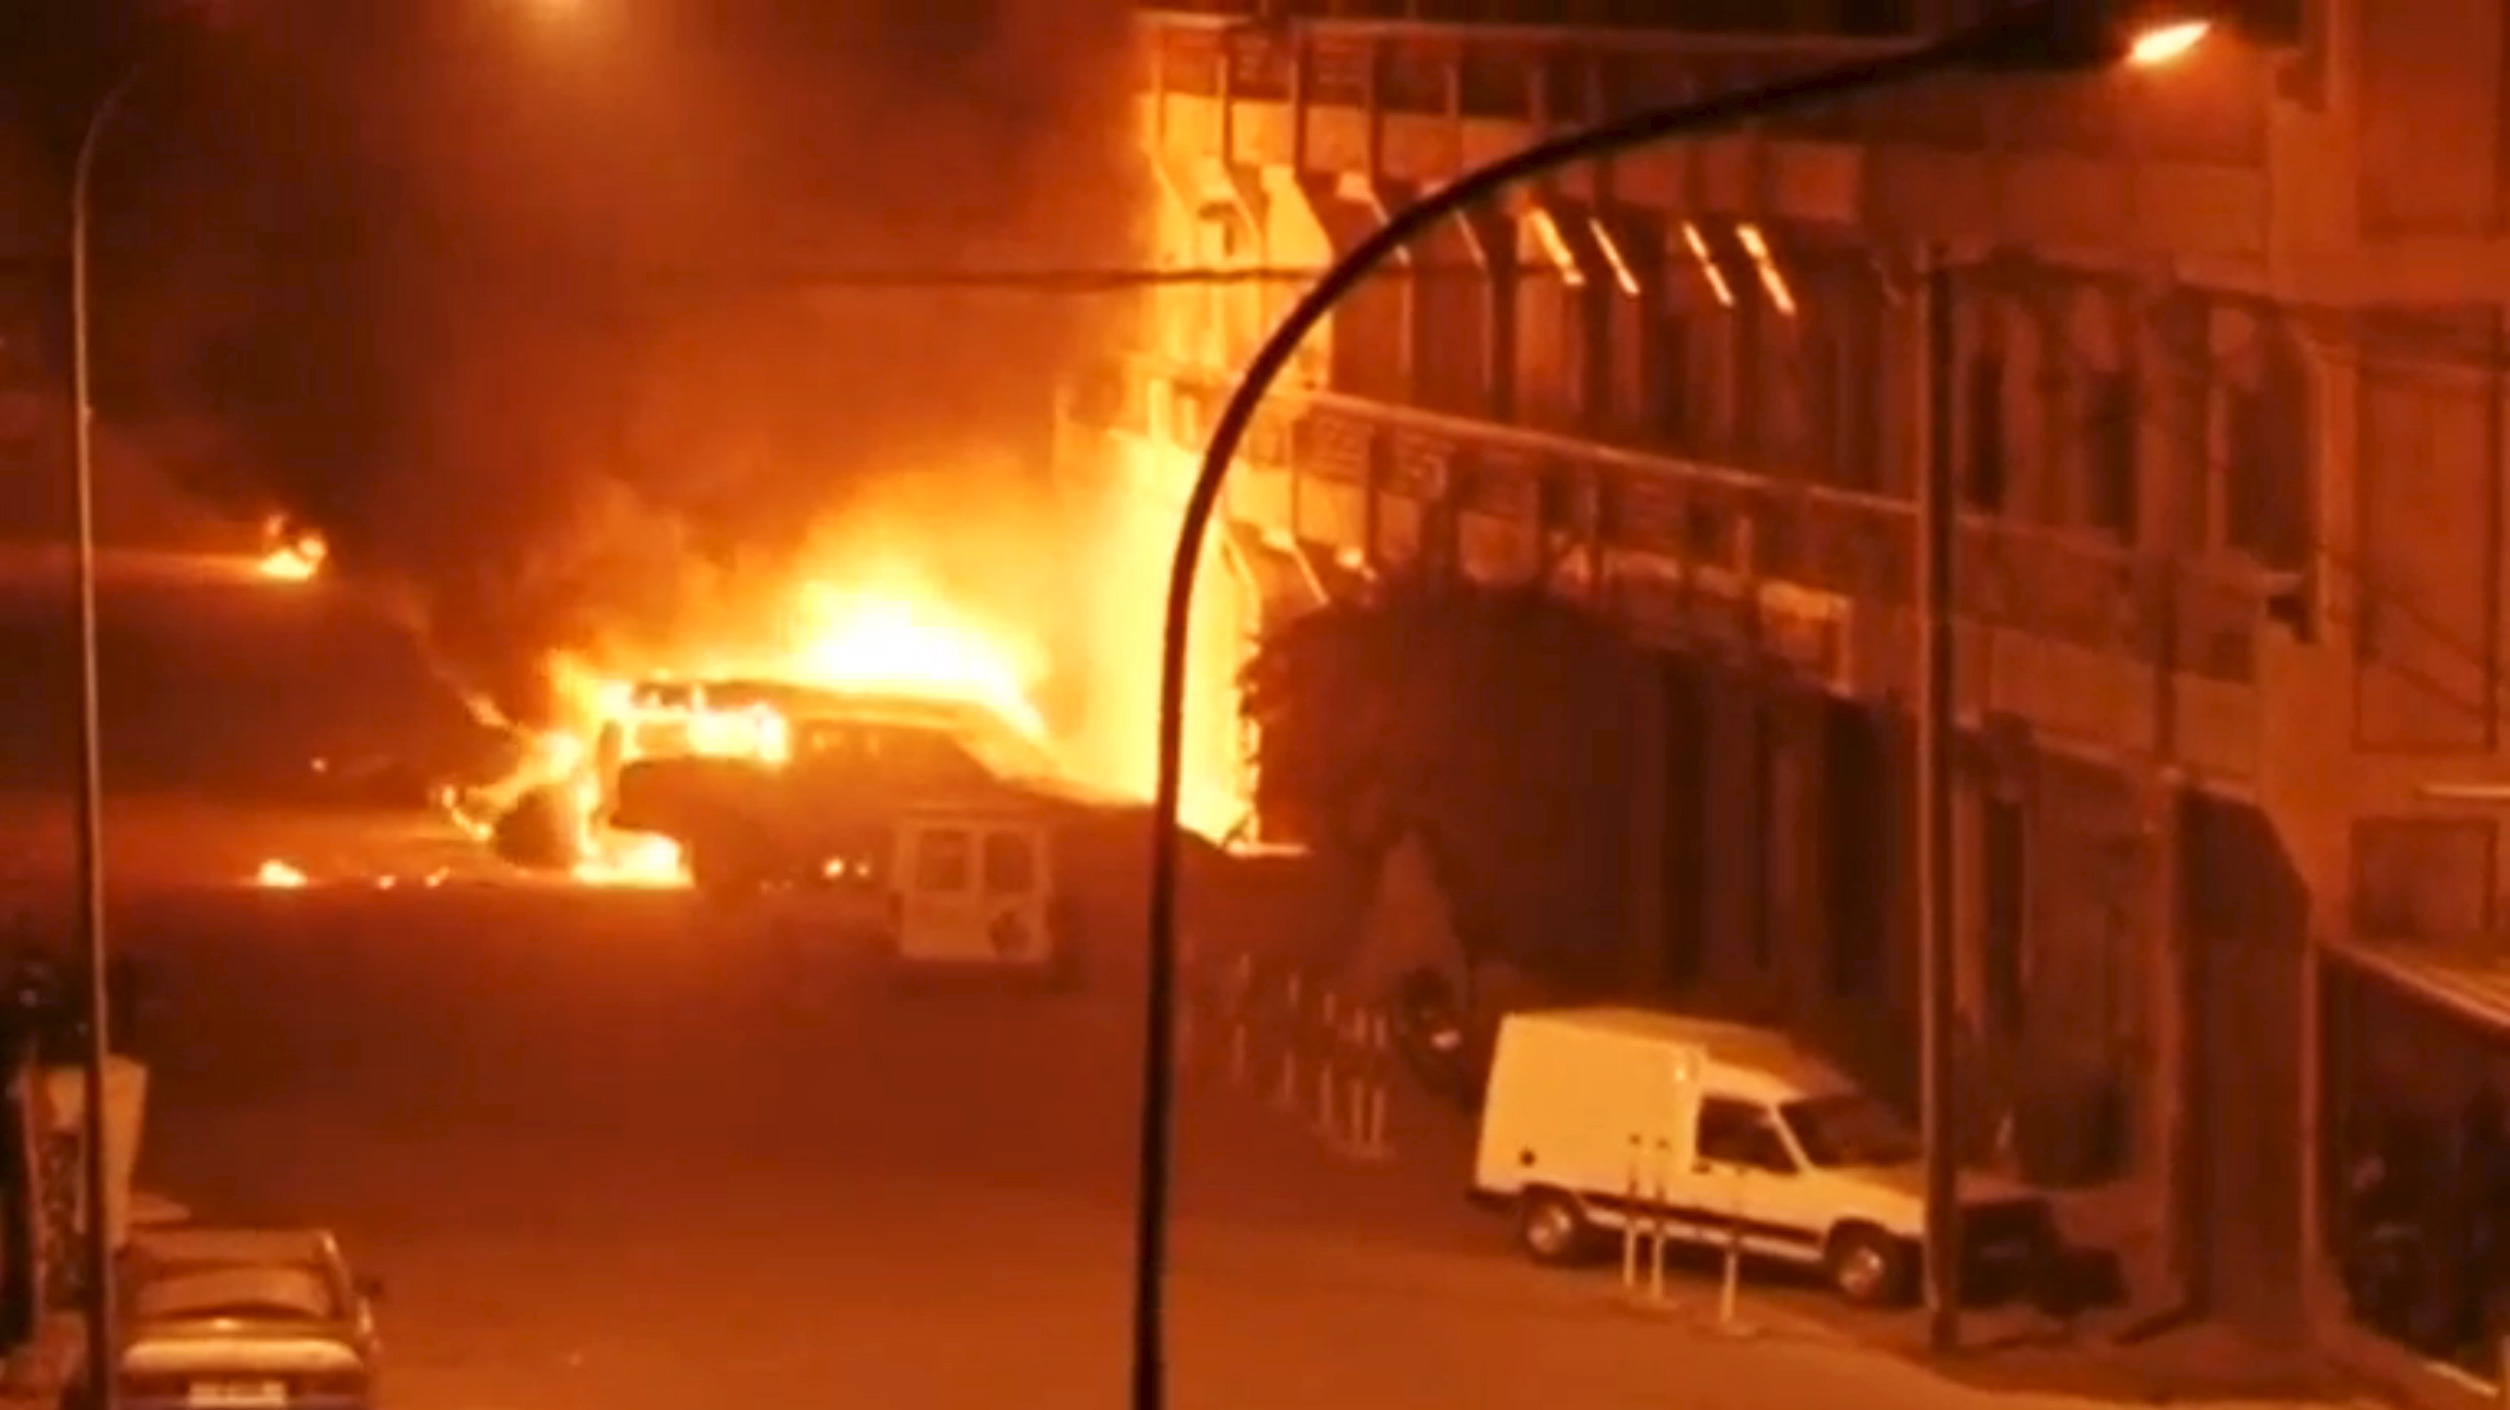 View shows vehicles on fire outside Splendid Hotel in Ouagadougou